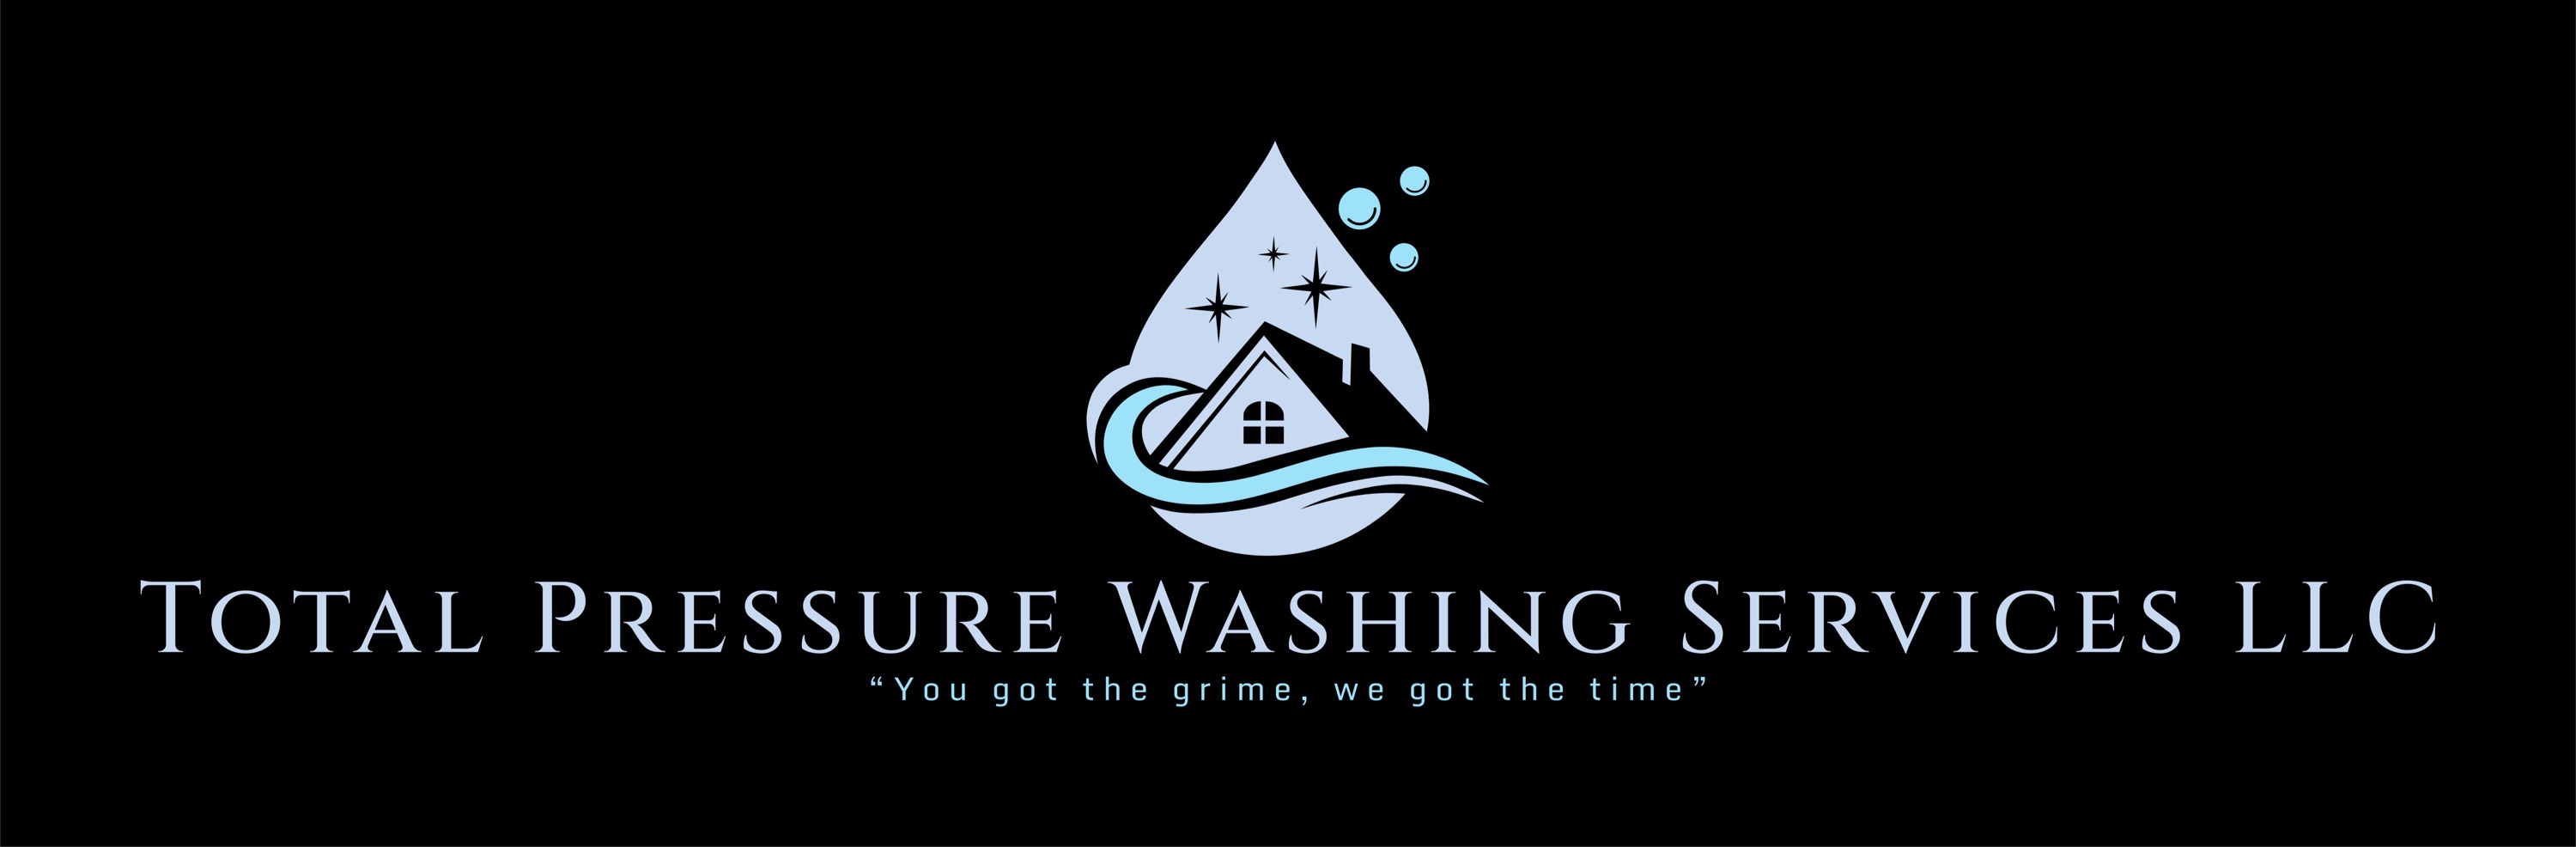 Total Pressure Washing Services, LLC Logo